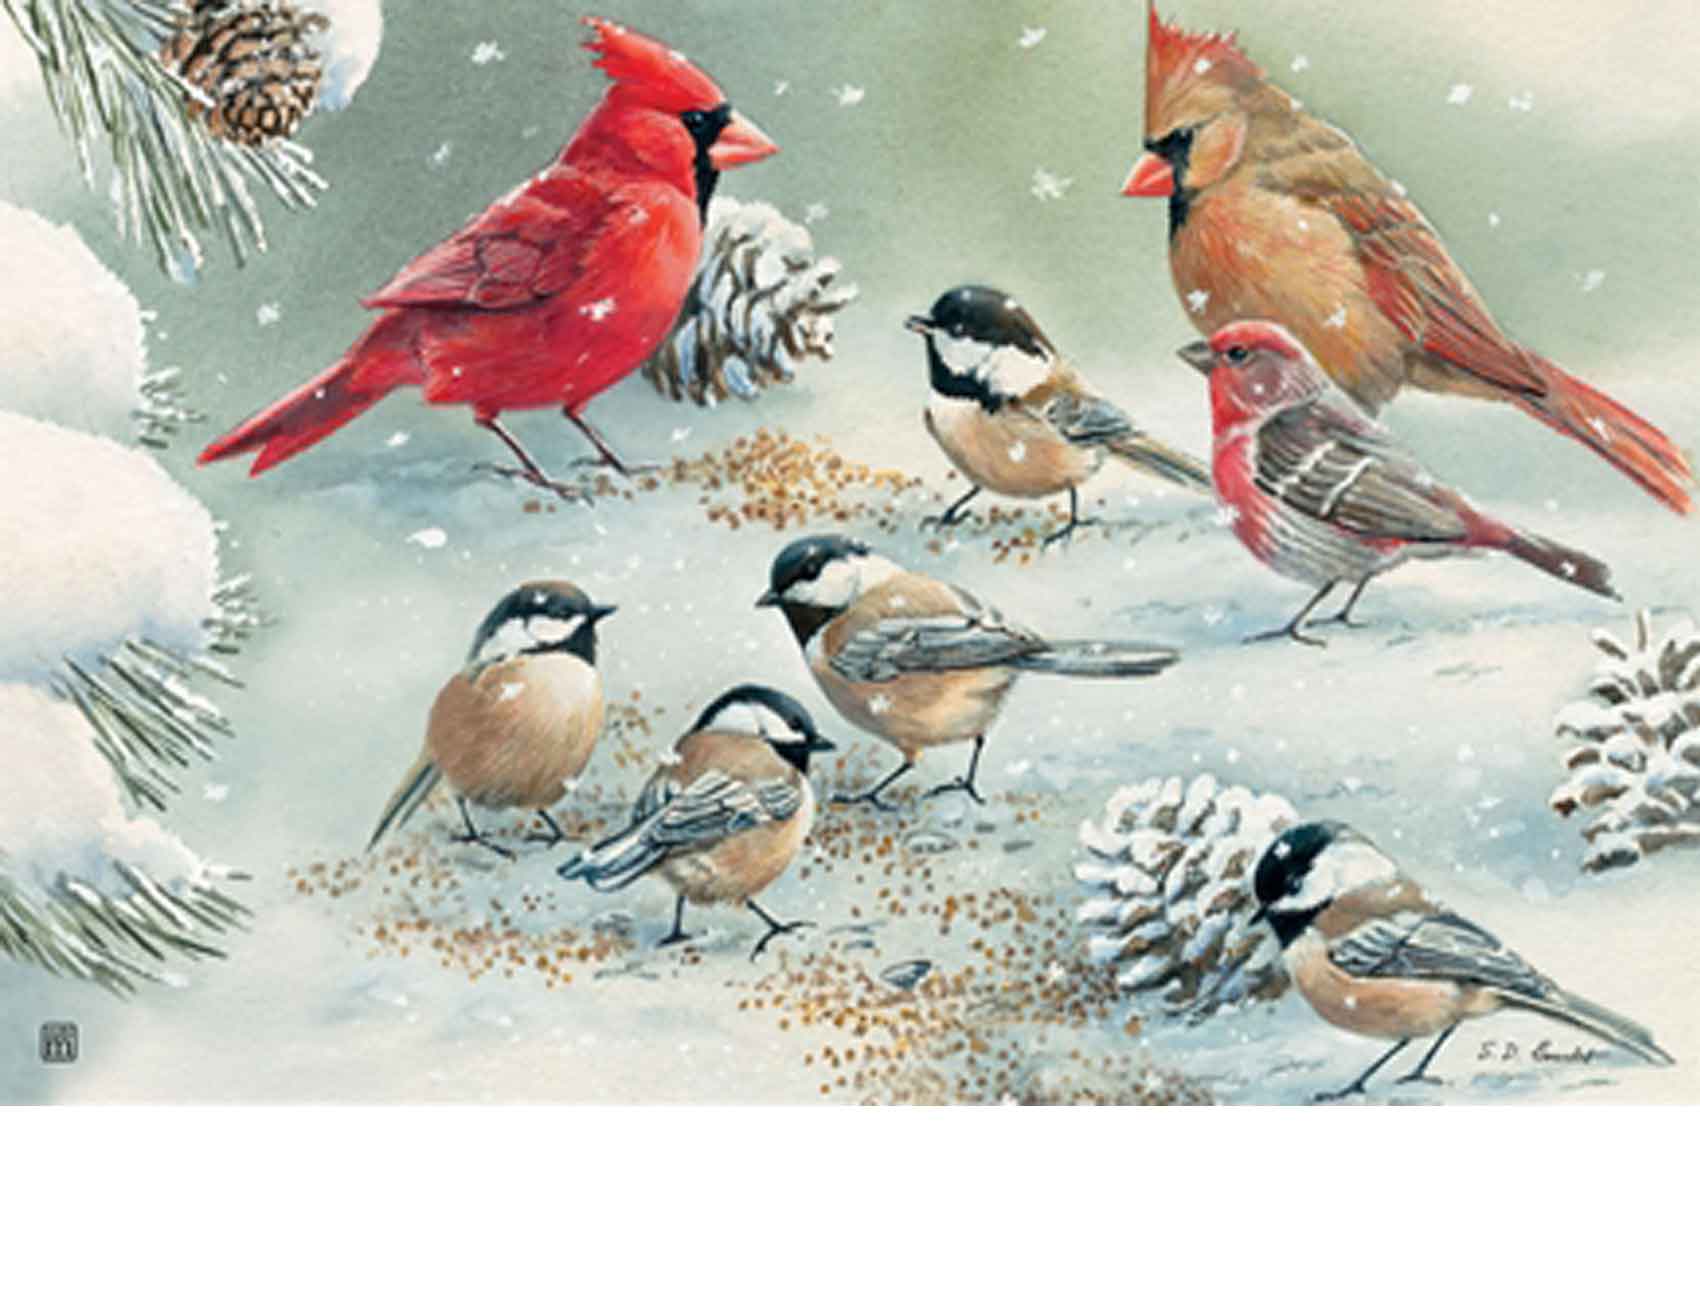 https://www.everythingdoormats.com/images/products/winter-bird-feeding-matmates-insert-doormat-18x30-13160mw.jpg